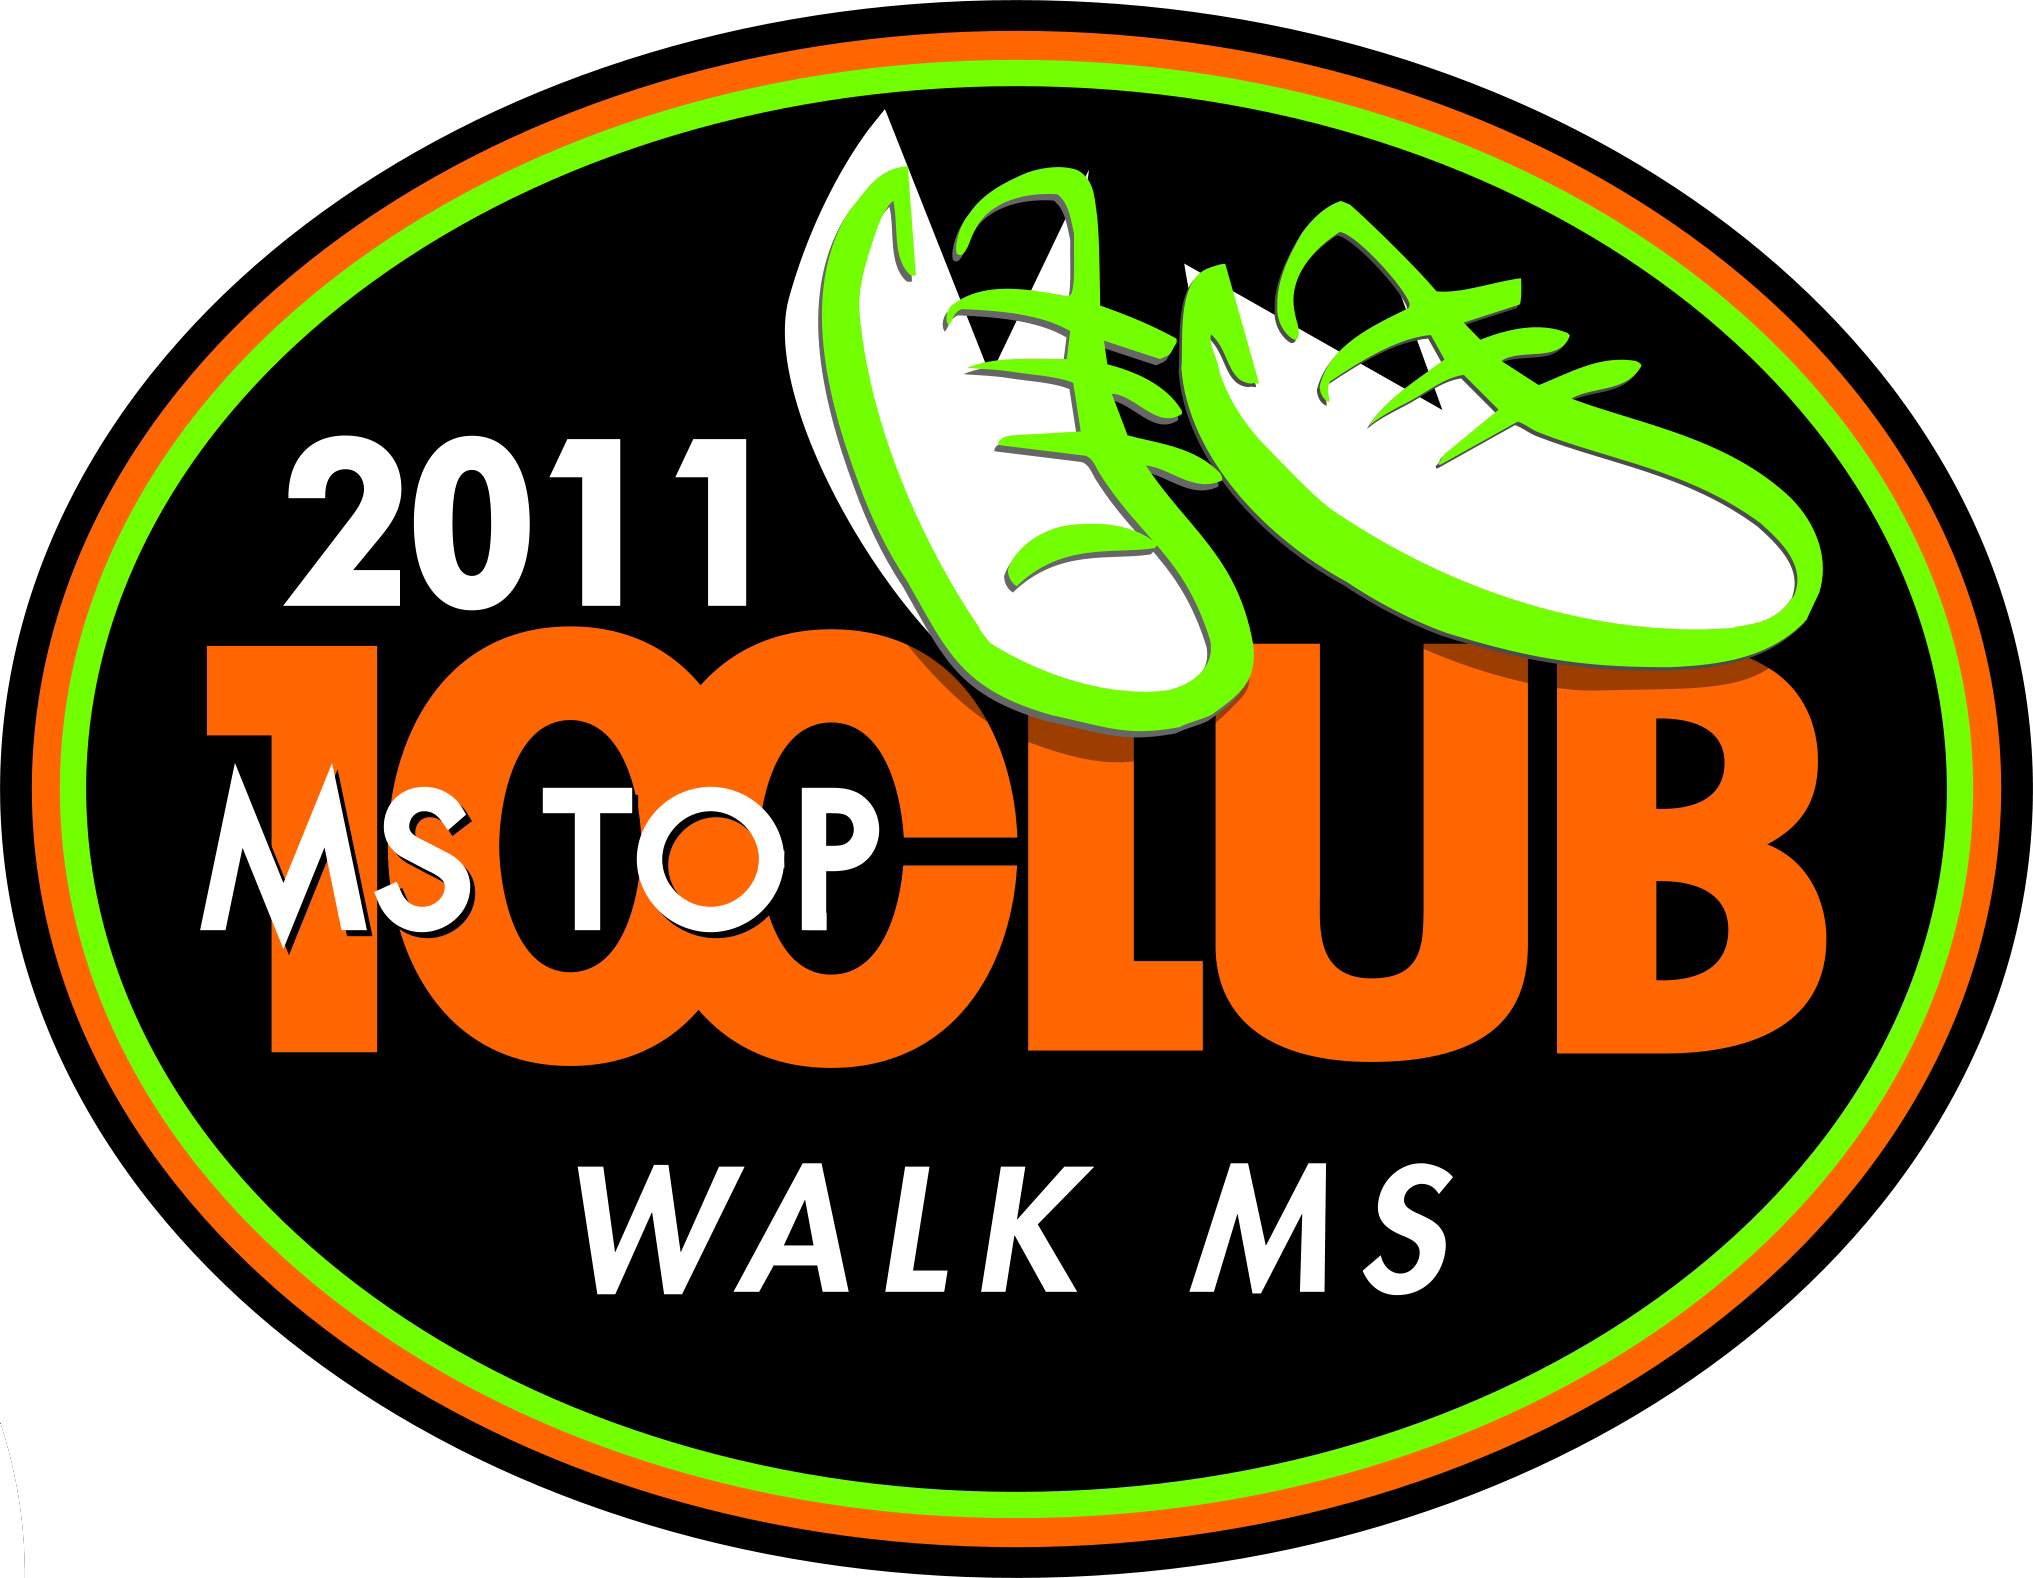 GAA 2011 walk MS Top 100 Club Logo